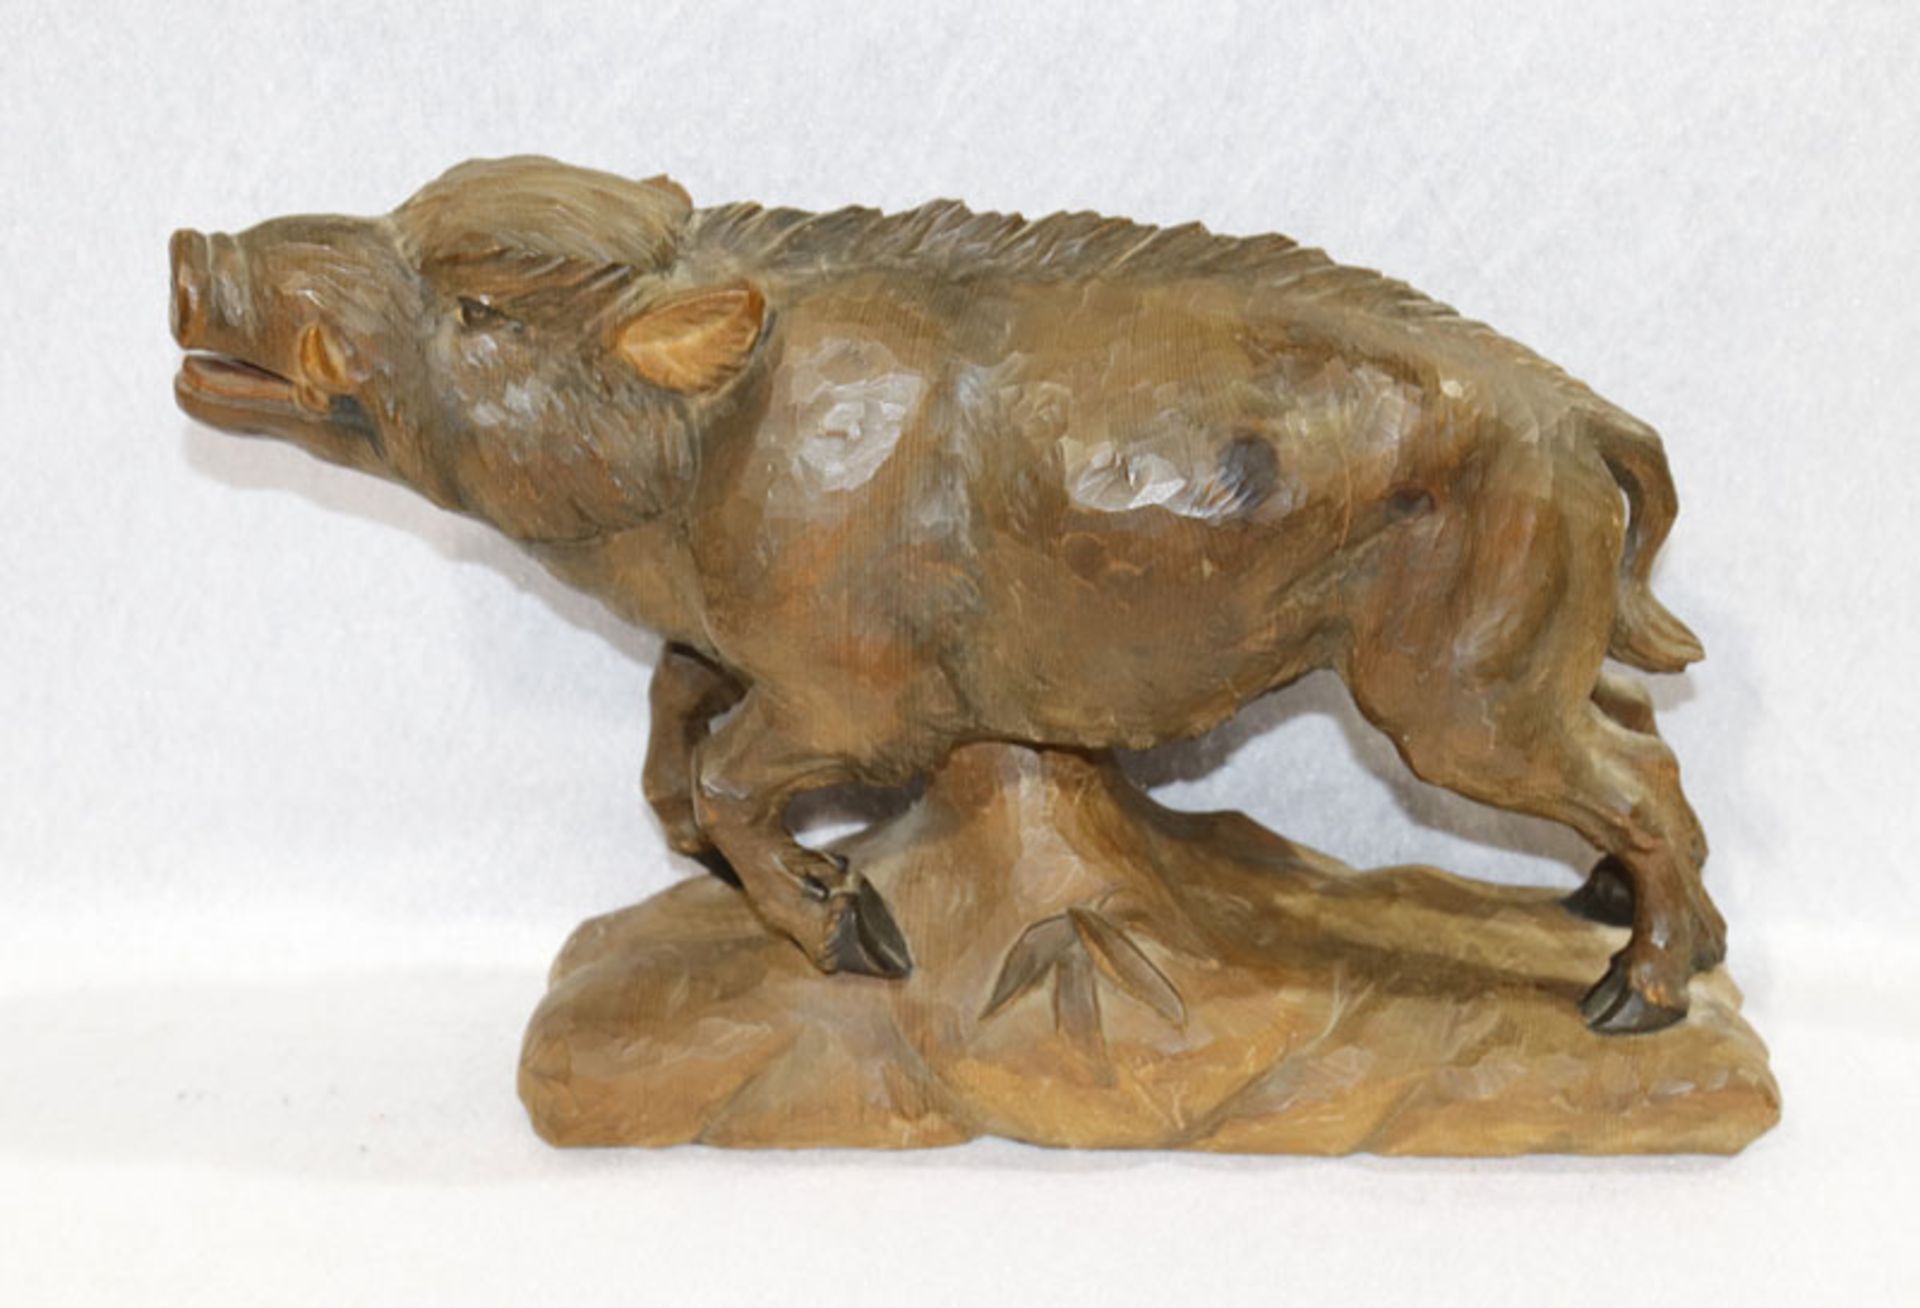 Holz Tierskulptur 'Wildschwein', gebeizt, am Boden beschriftet Wanderpreis, H 22,5 cm, L 38 cm, B 11